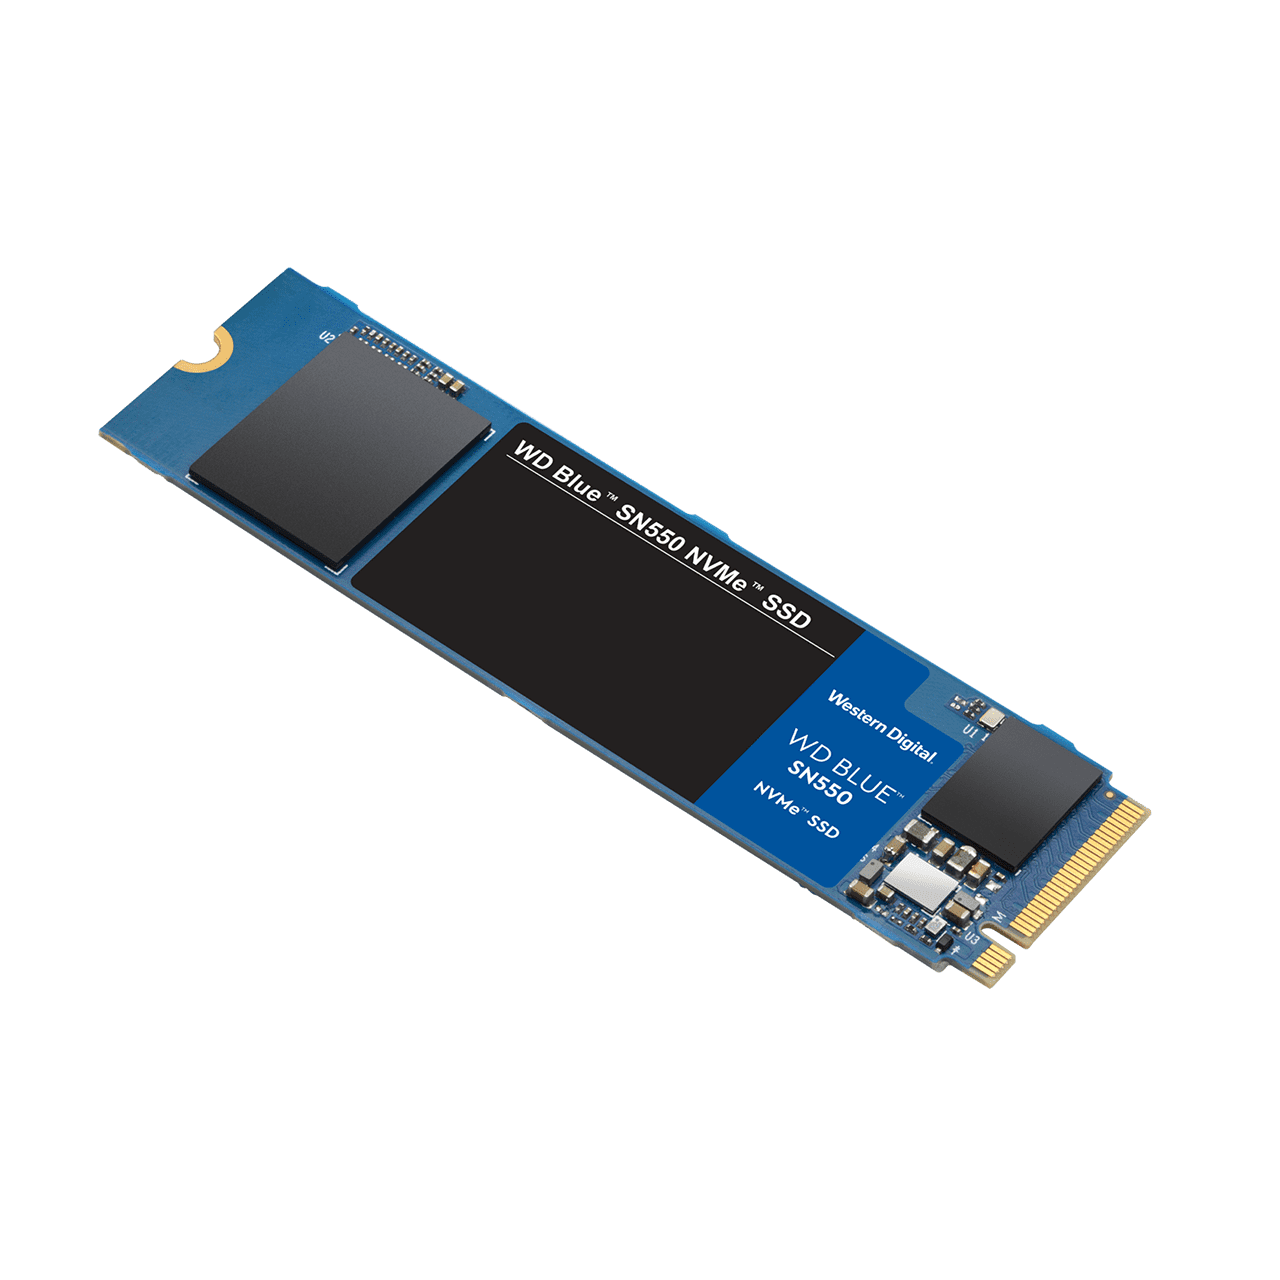 WD Blueâ„¢ SN550 NVMeâ„¢ Single-sided M.2 2280 PCIeÂ® Gen3 SSD - 250GB Read Performance Up to 2400MB/s